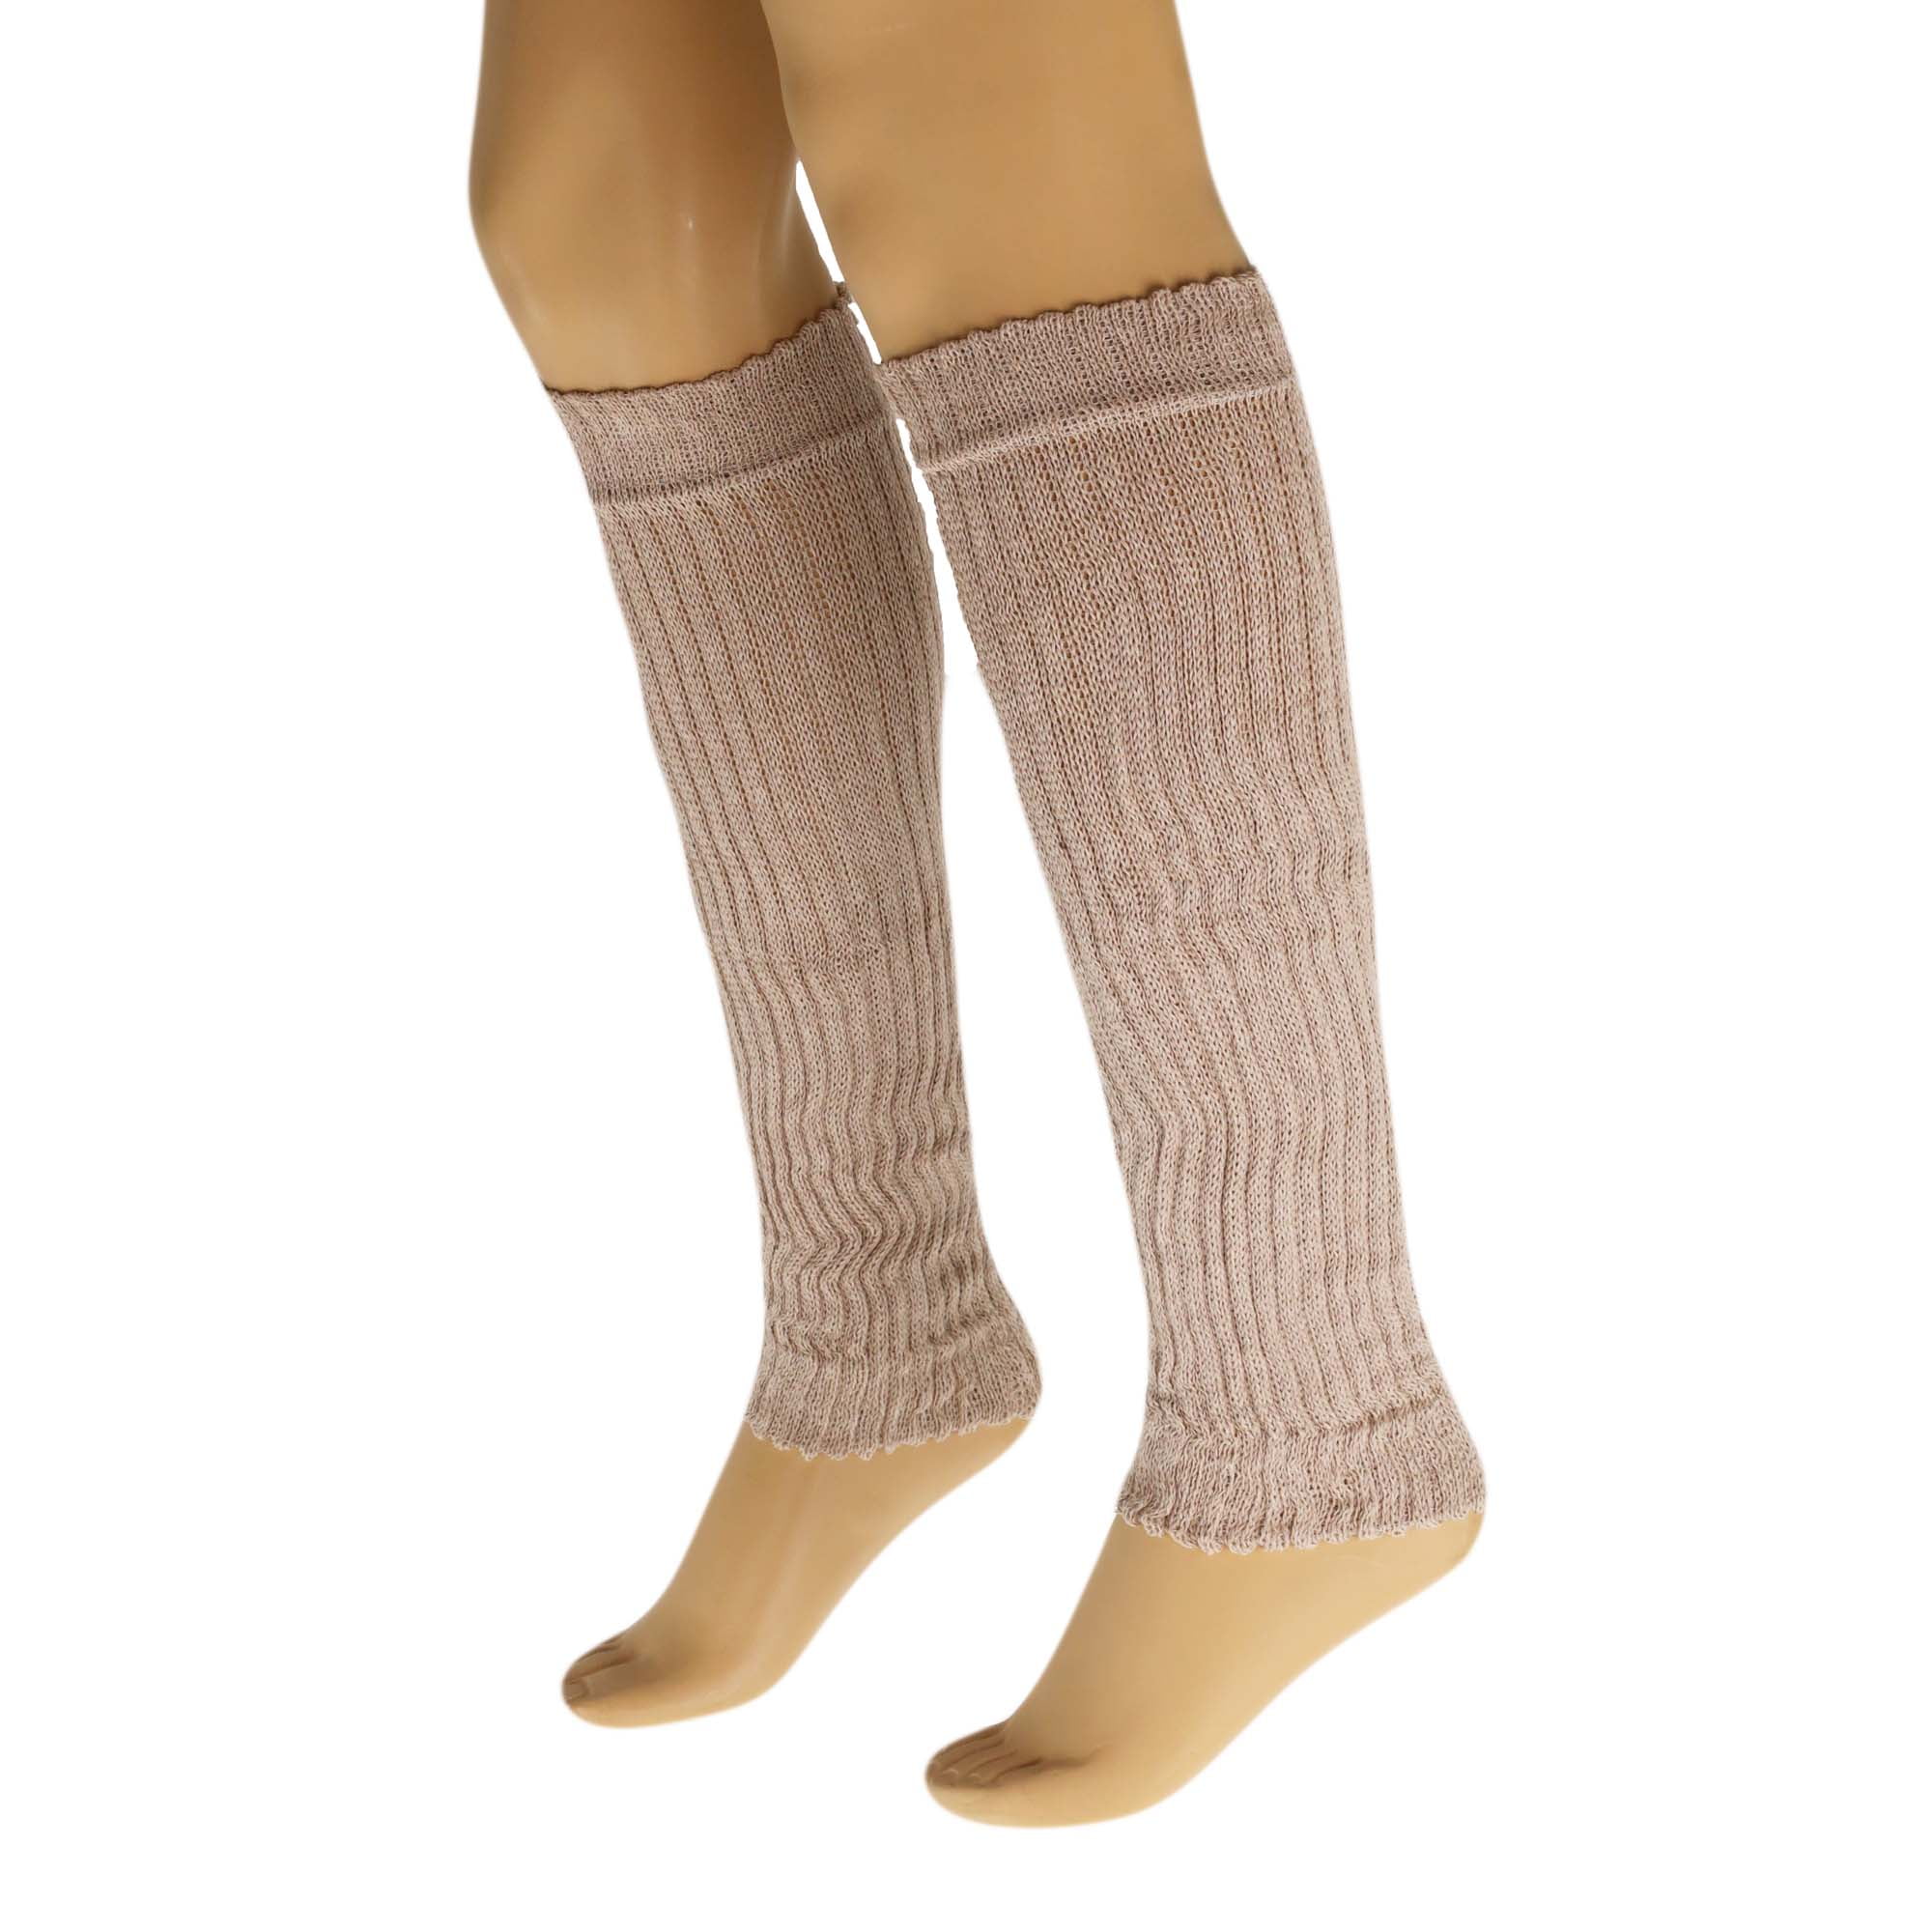 Cotton Leg Warmers for Women Black 1 Pair Knitted Retro - Walmart